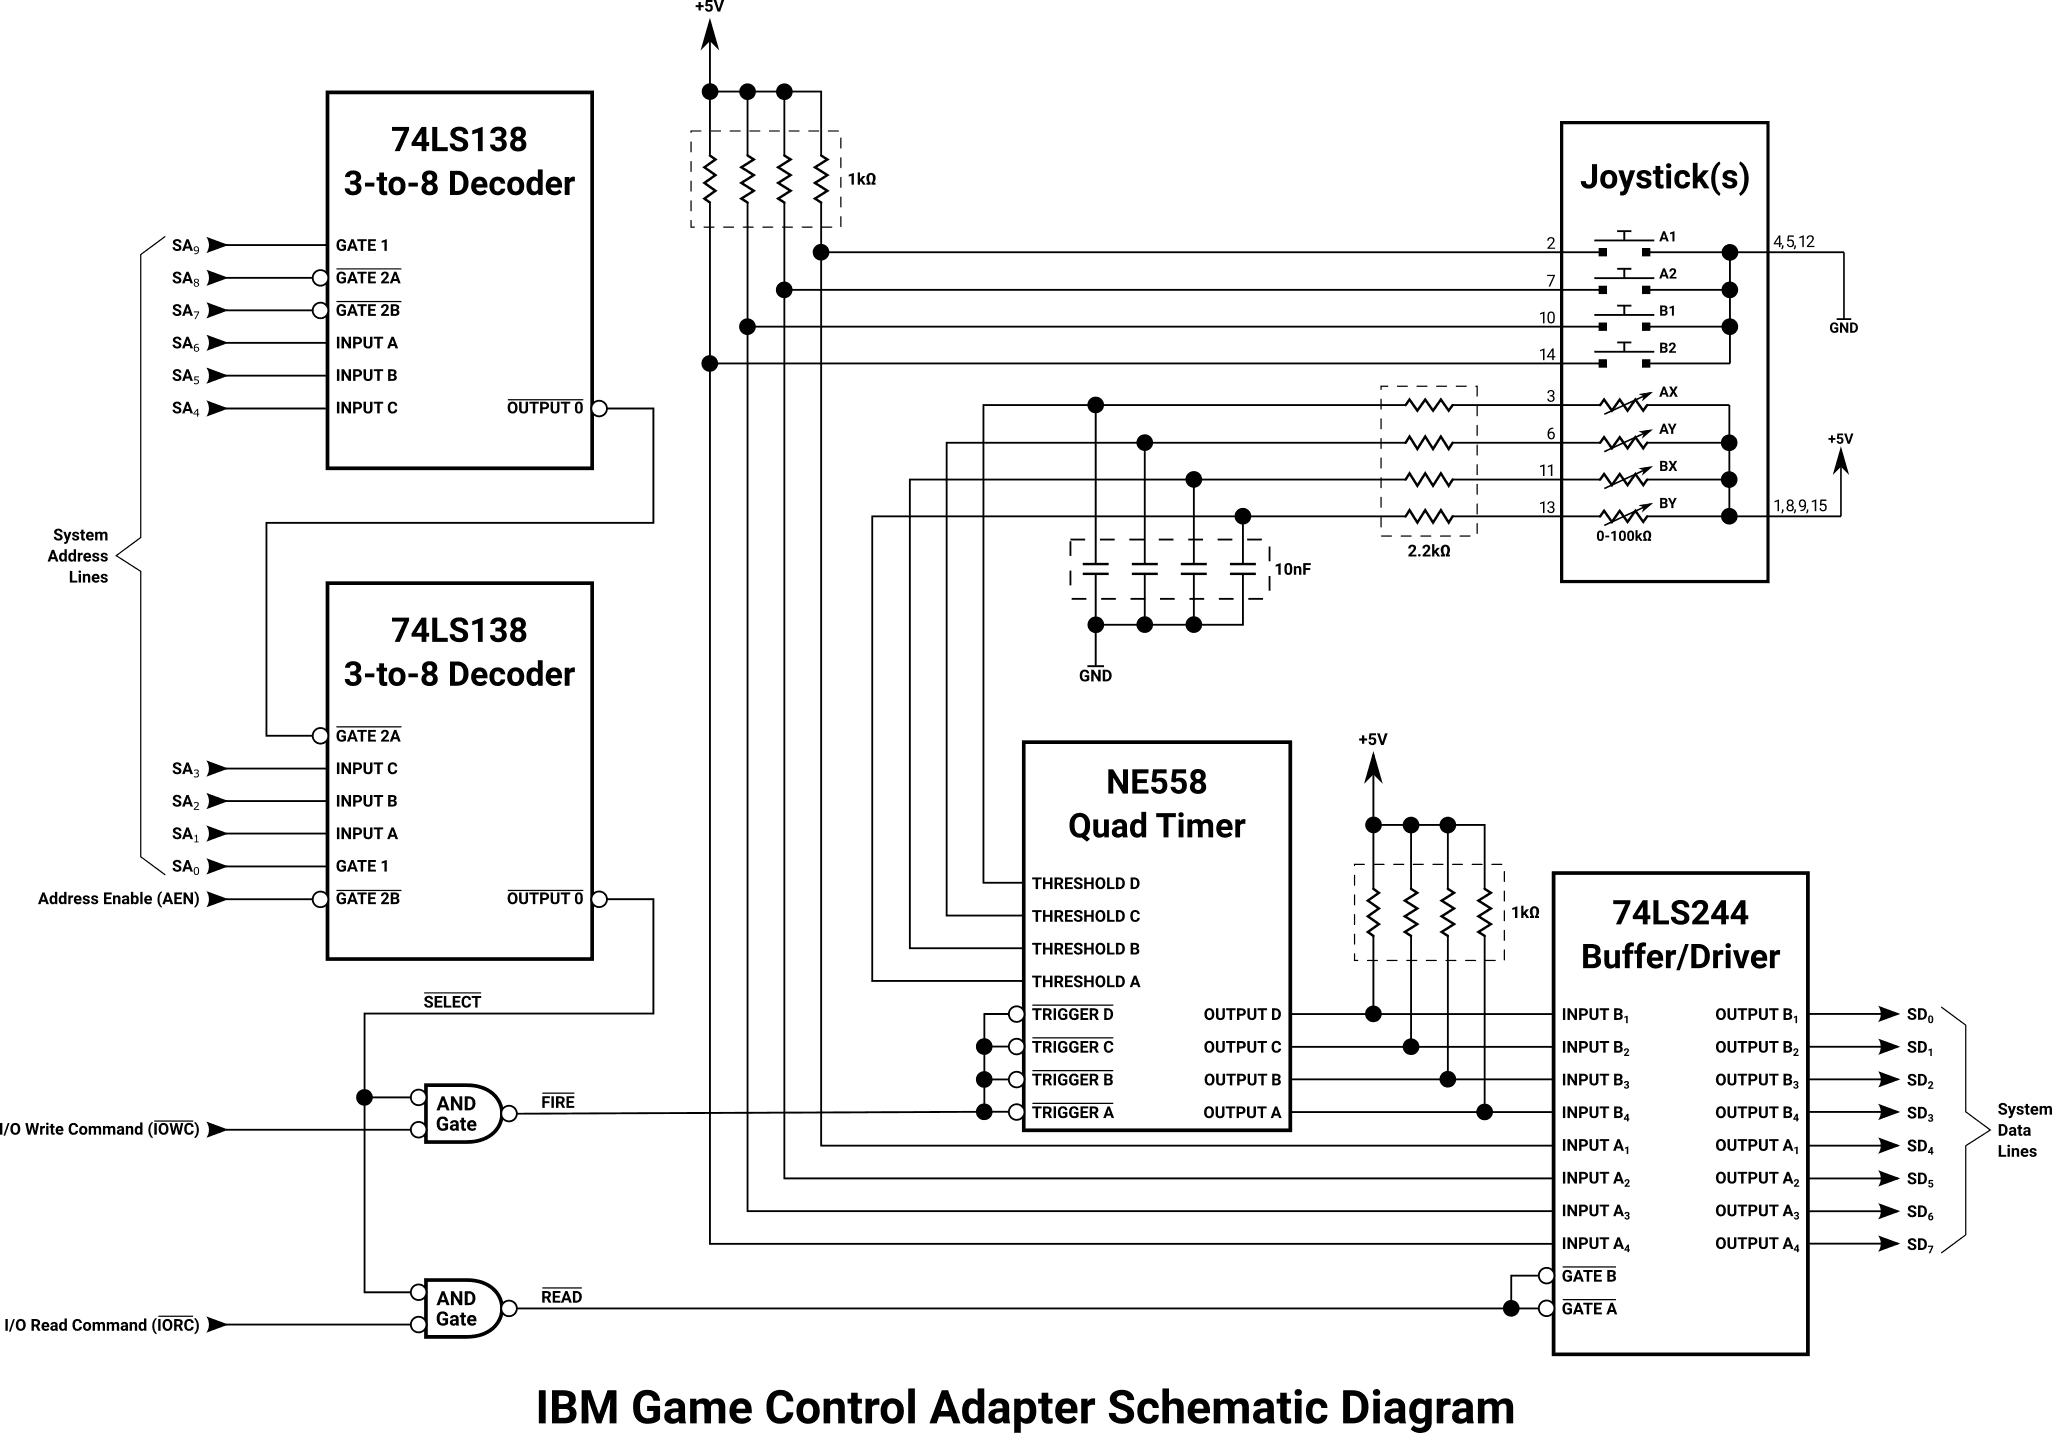 IBM Game Control Adapter schematic diagram.